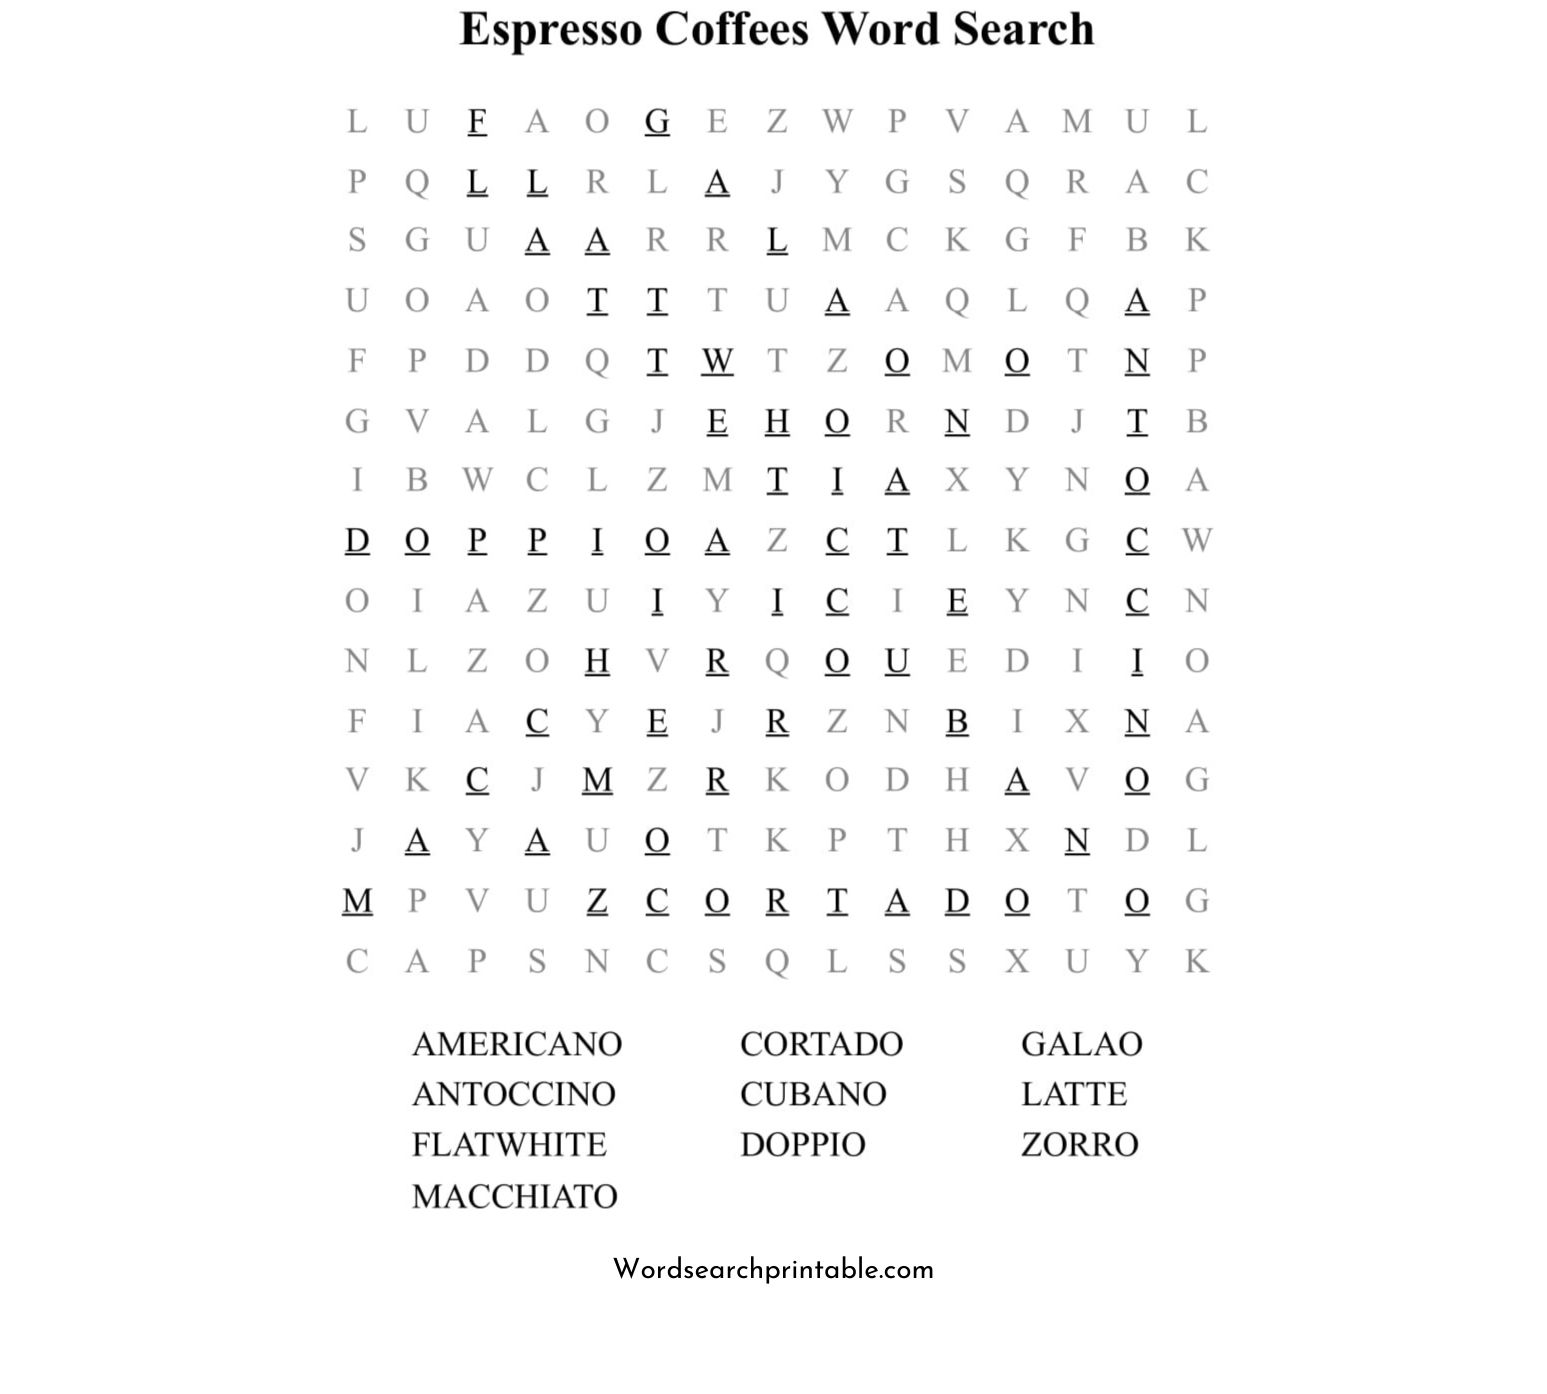 espresso coffees word search puzzle solution